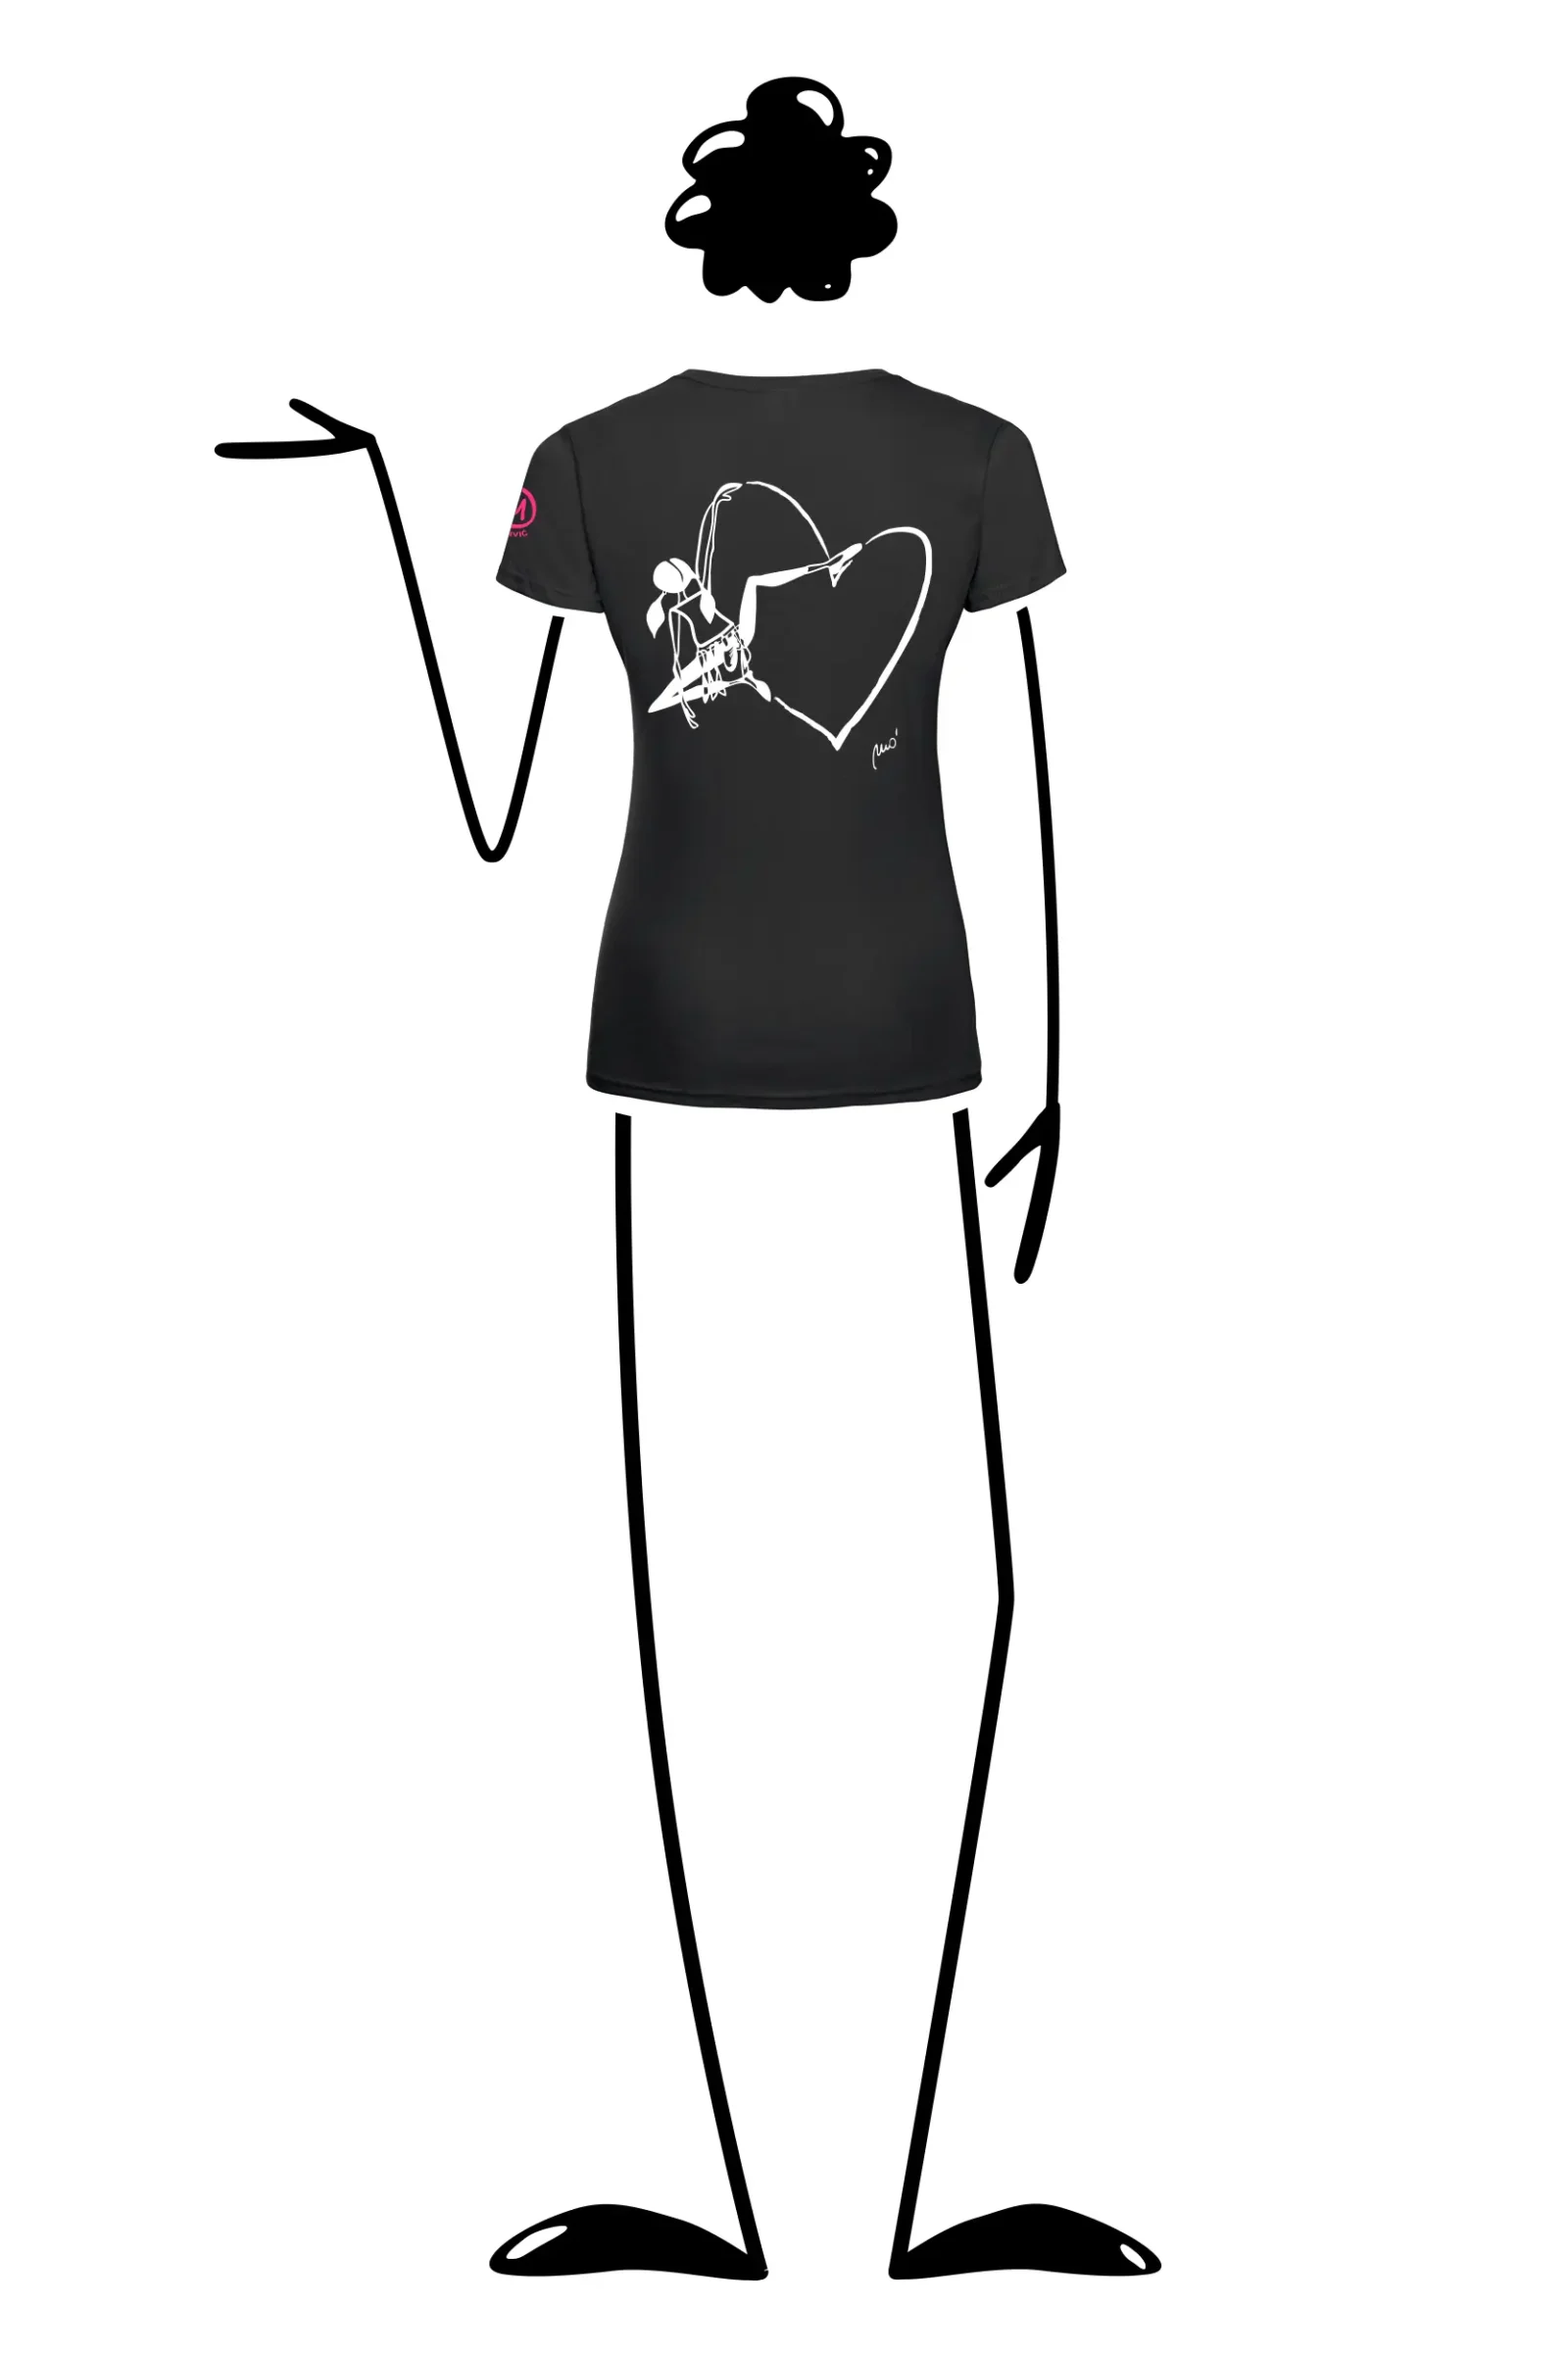 T-shirt arrampicata donna - cotone nero - "Out" SHARON by MONVIC